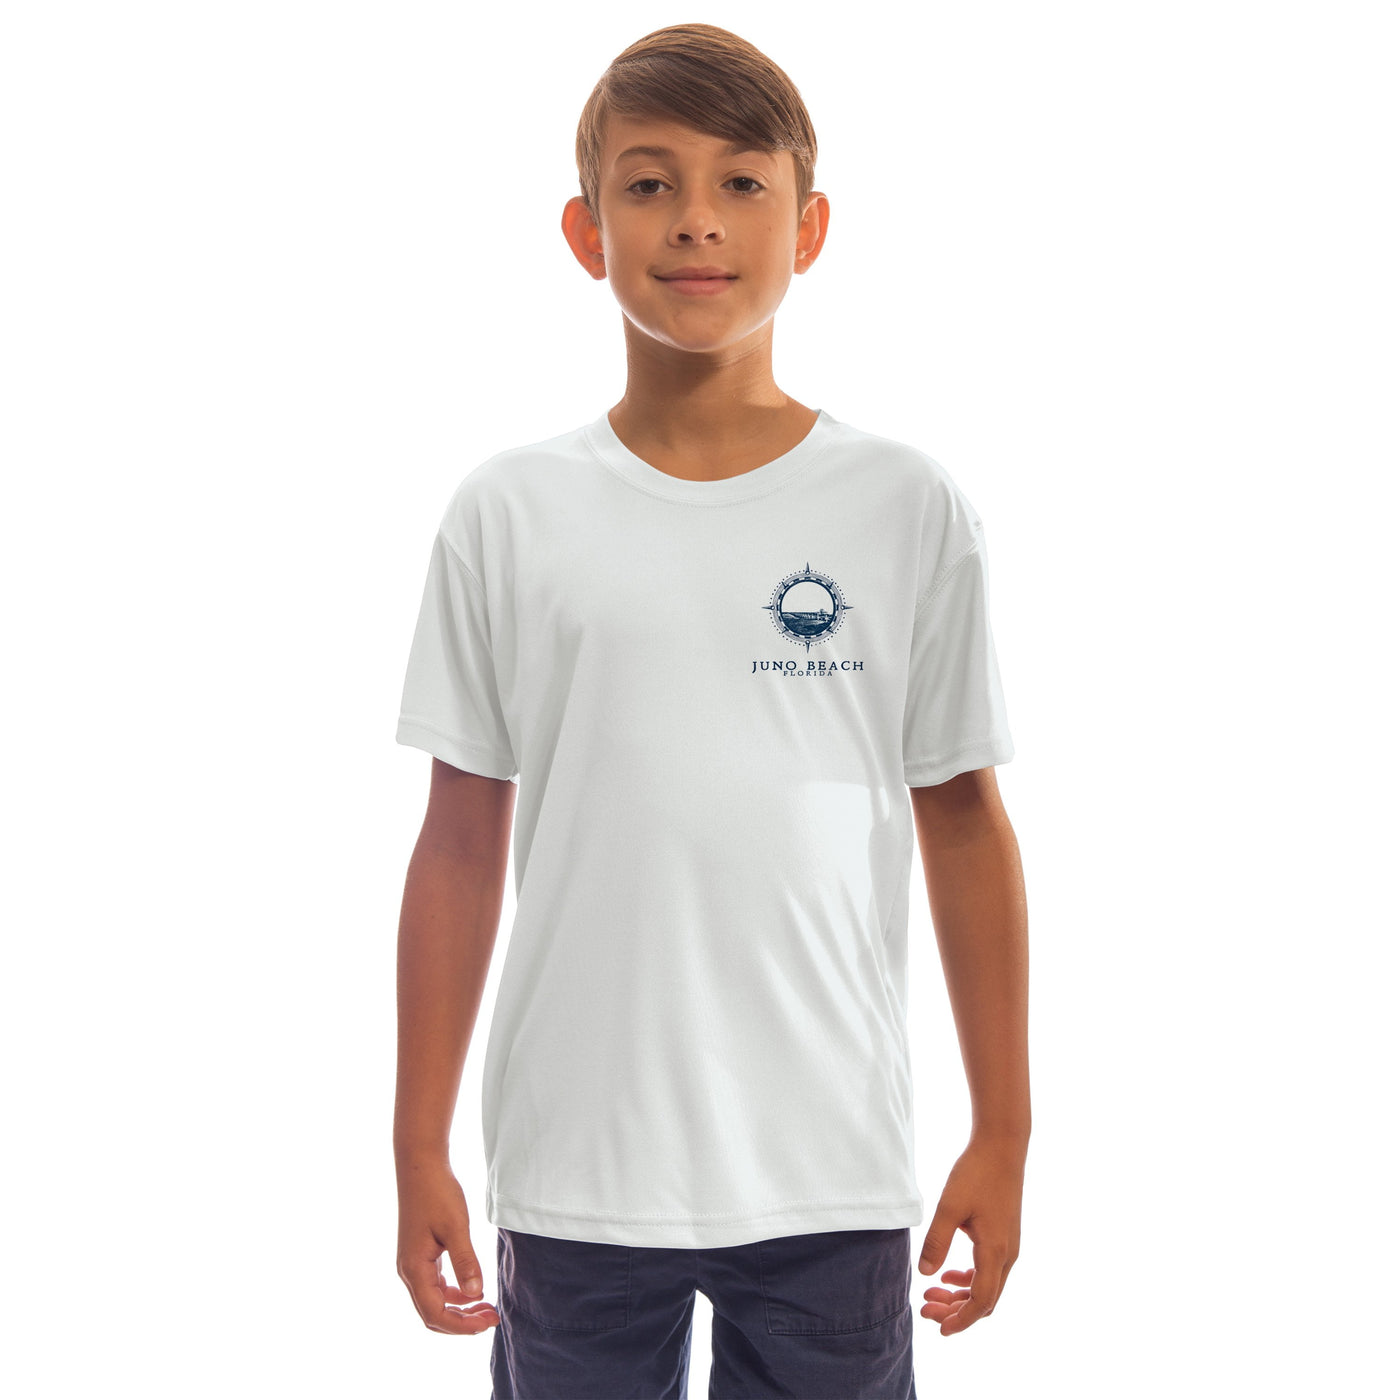 Compass Vintage Juno Beach Youth UPF 50+ UV/Sun Protection Long Sleeve T-Shirt